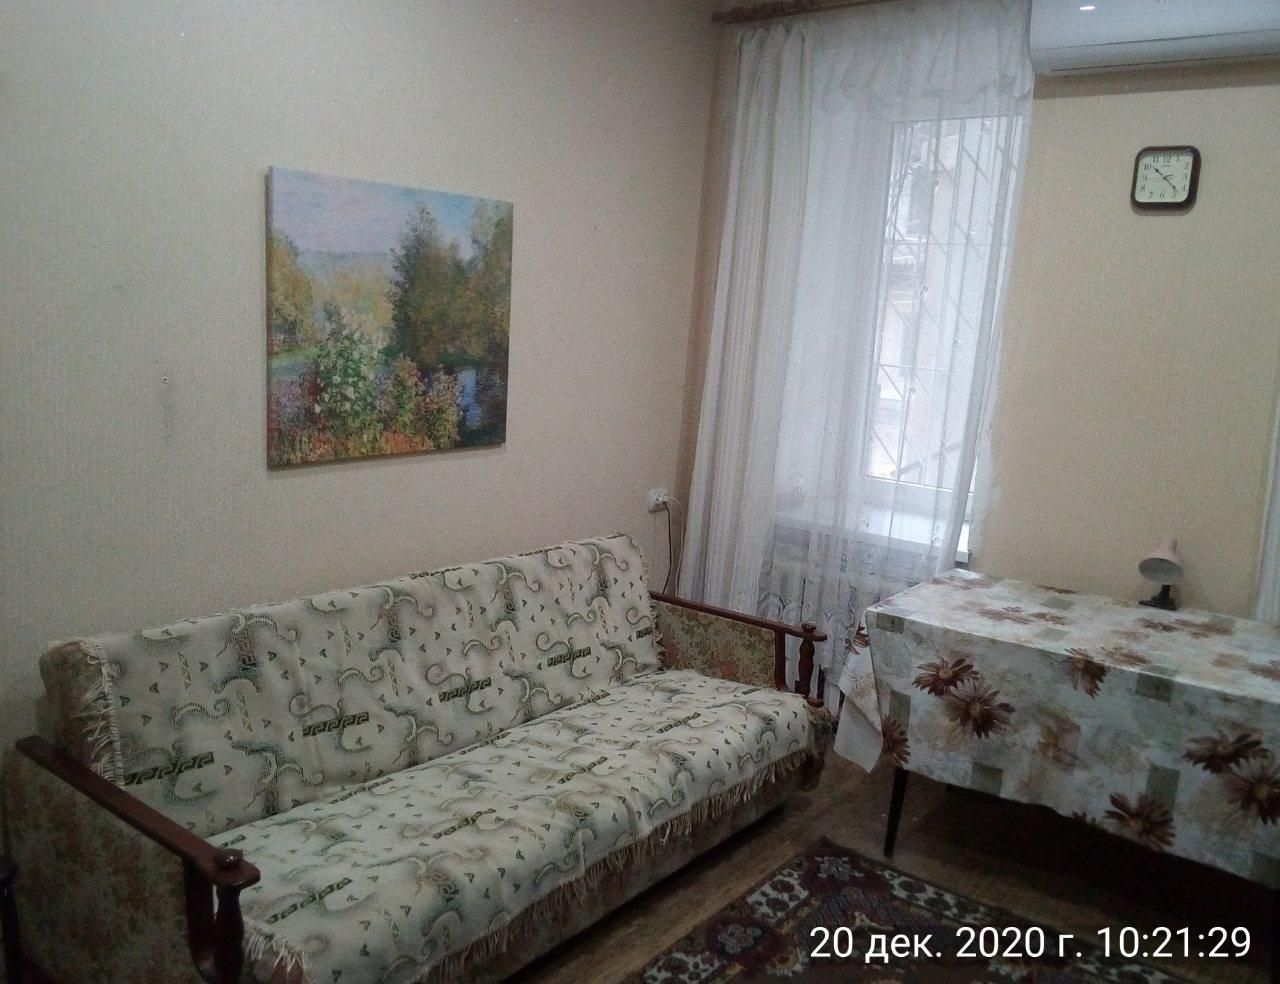 Продам 1 комнатную квартиру в квартале от Привоза